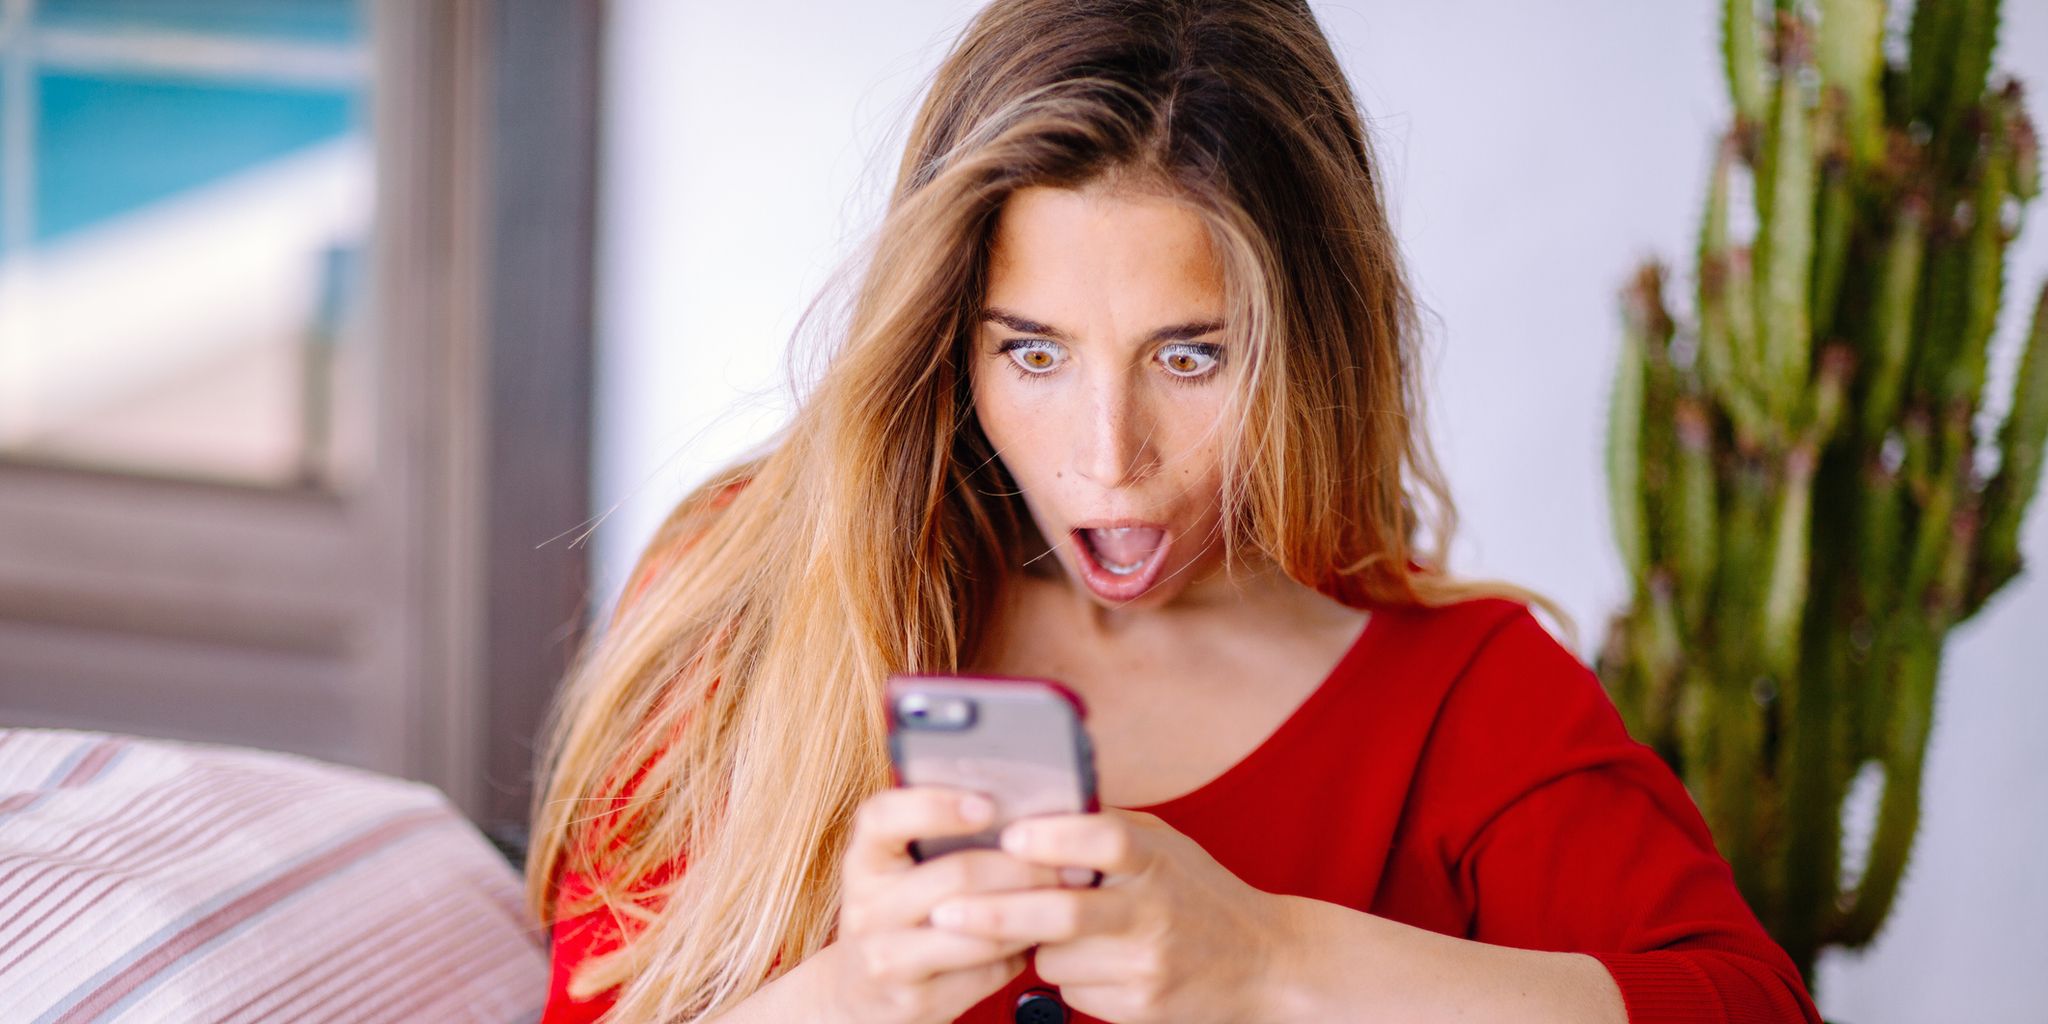 Woman feeling big surprise checking phone